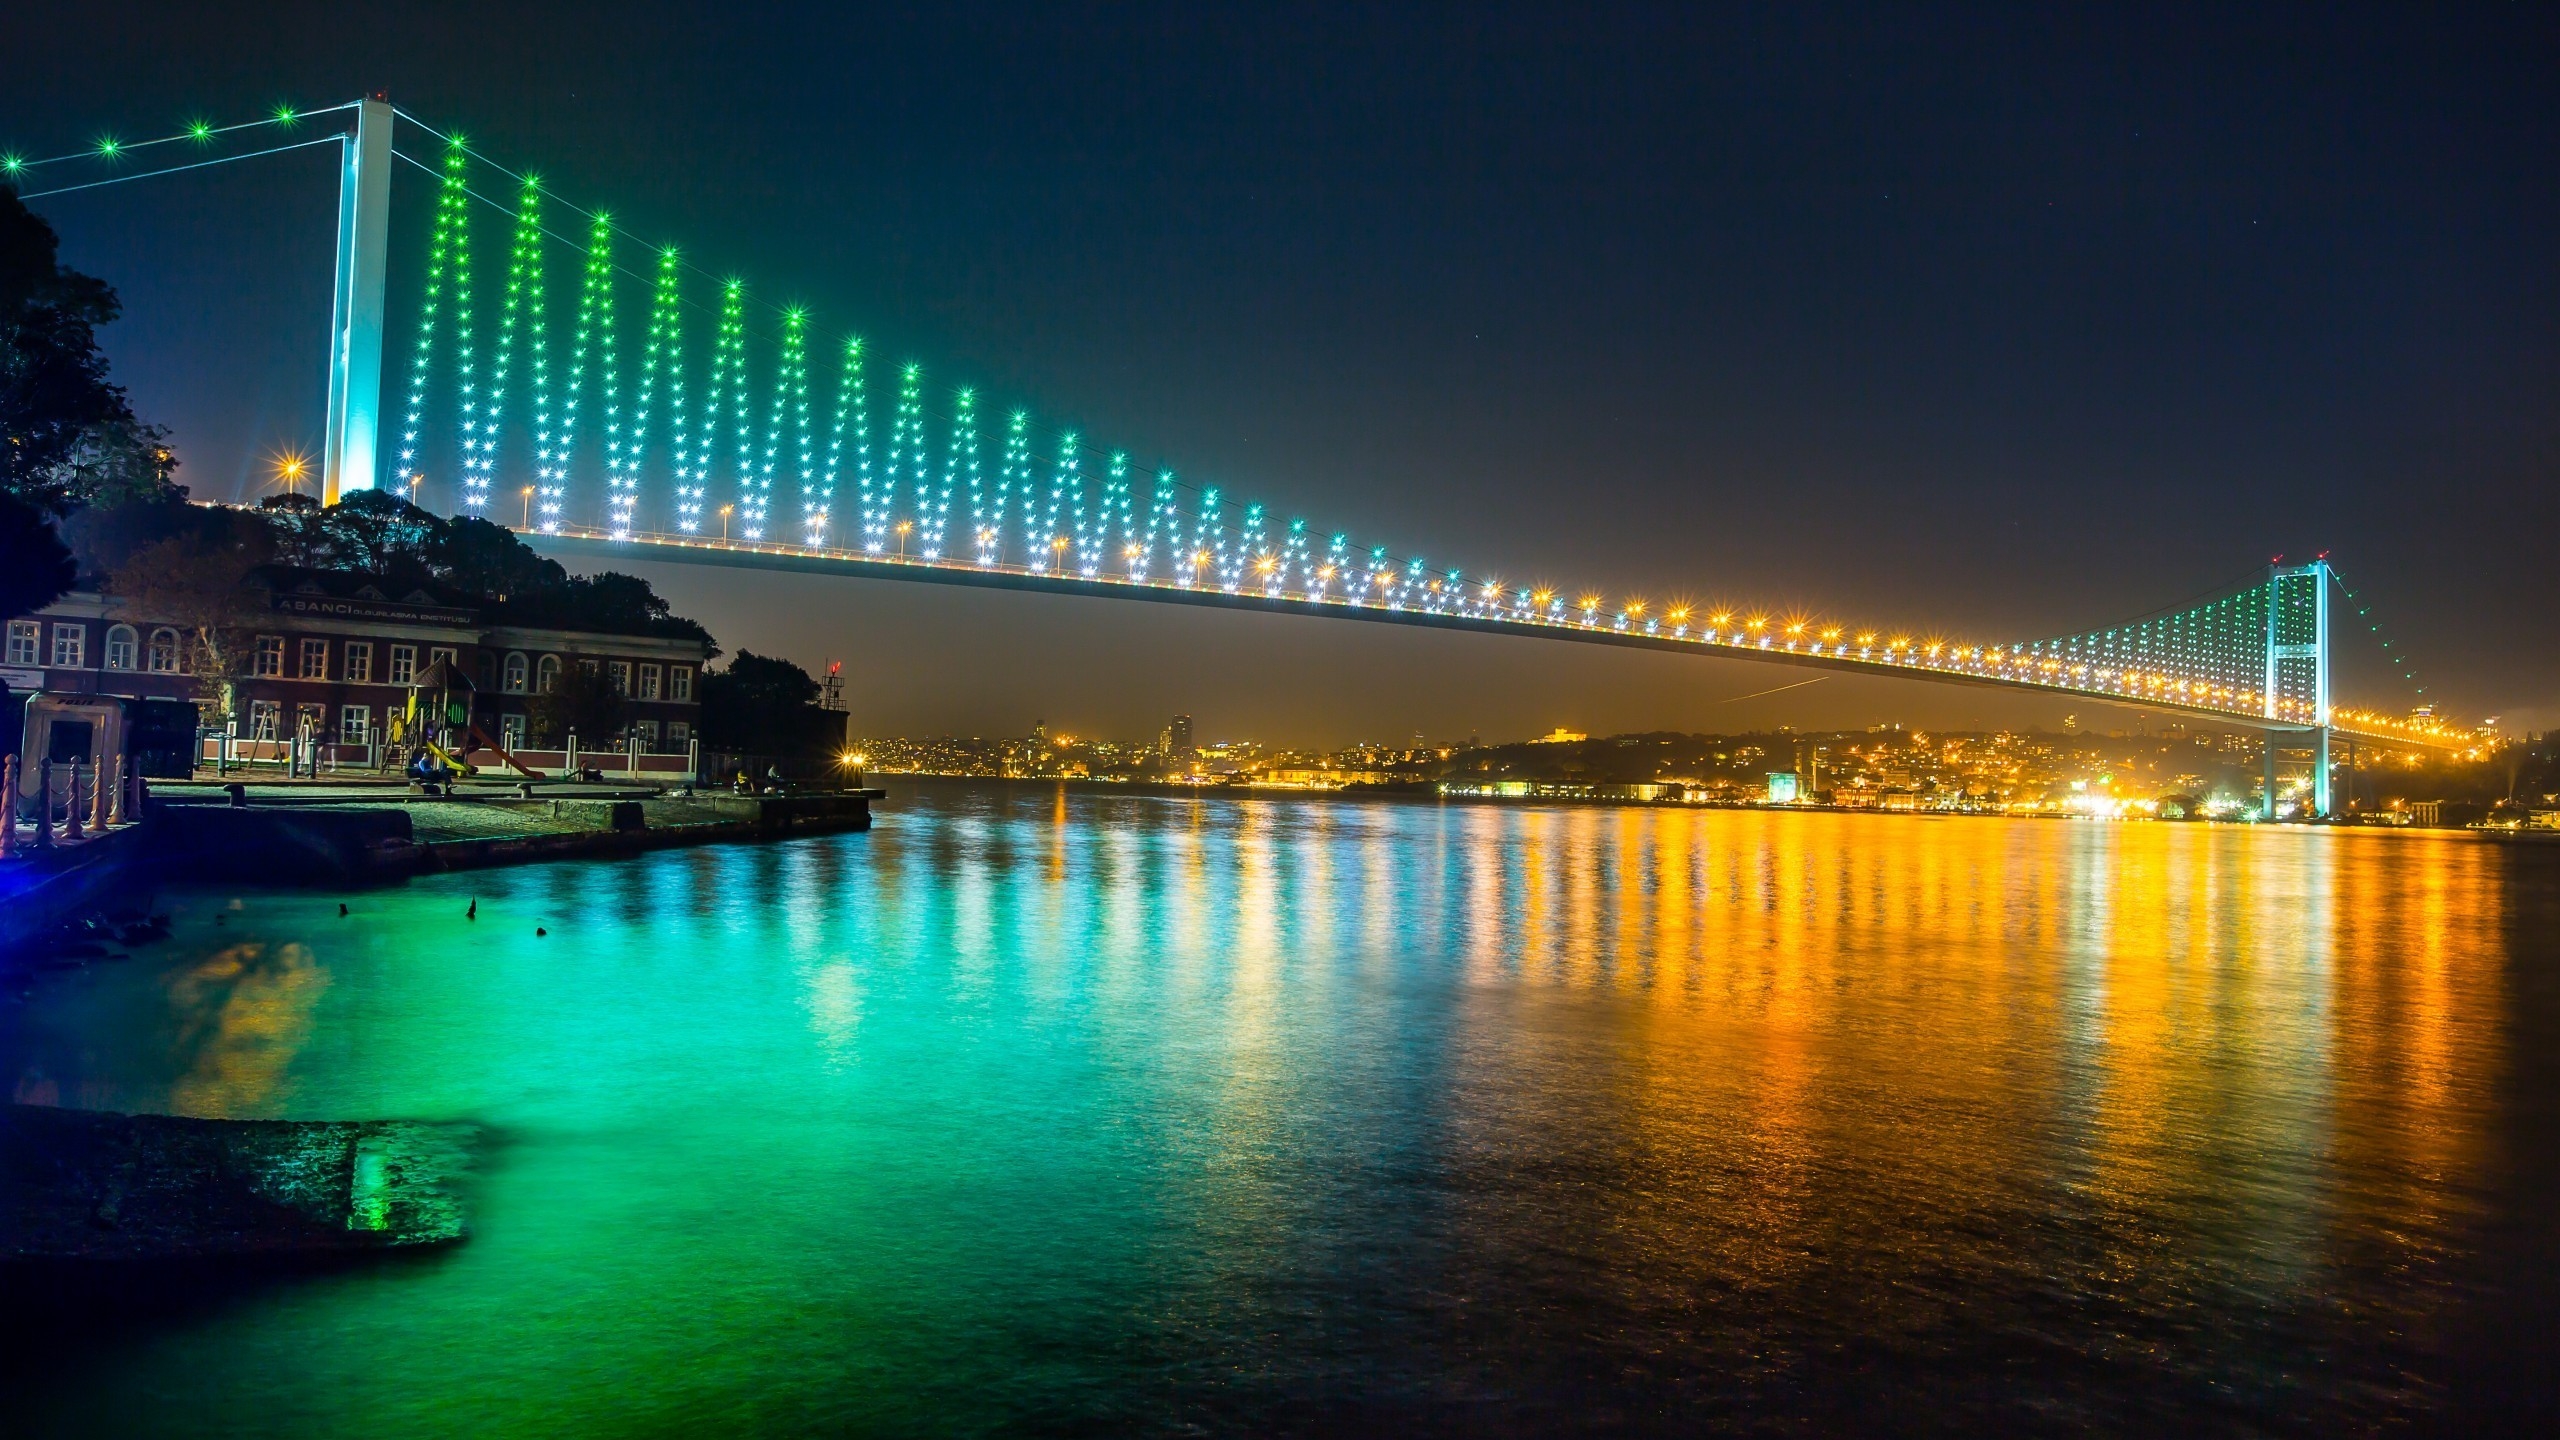 Bosphorus Bridge Istanbul for 2560x1440 HDTV resolution